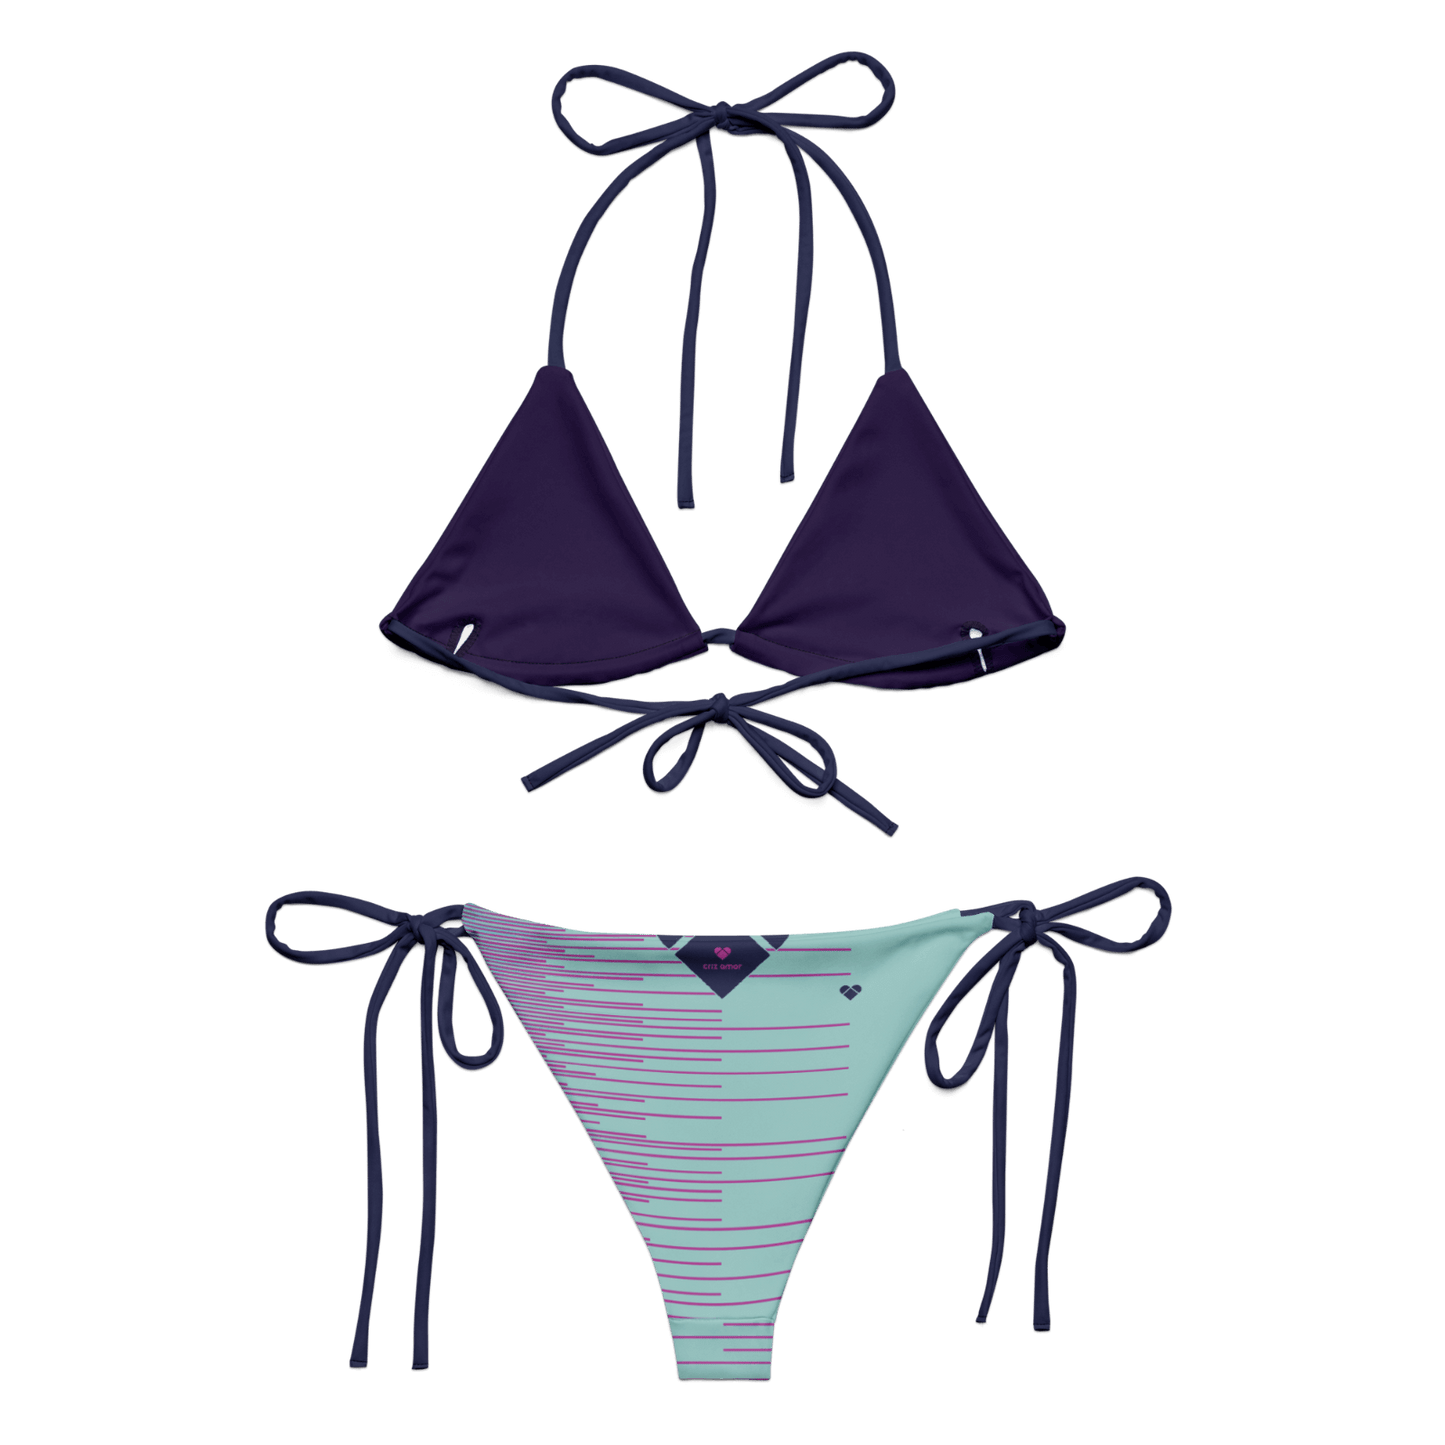 CRiZ AMOR Mint Stripes Bikini - Playful and Unique Beach Attire